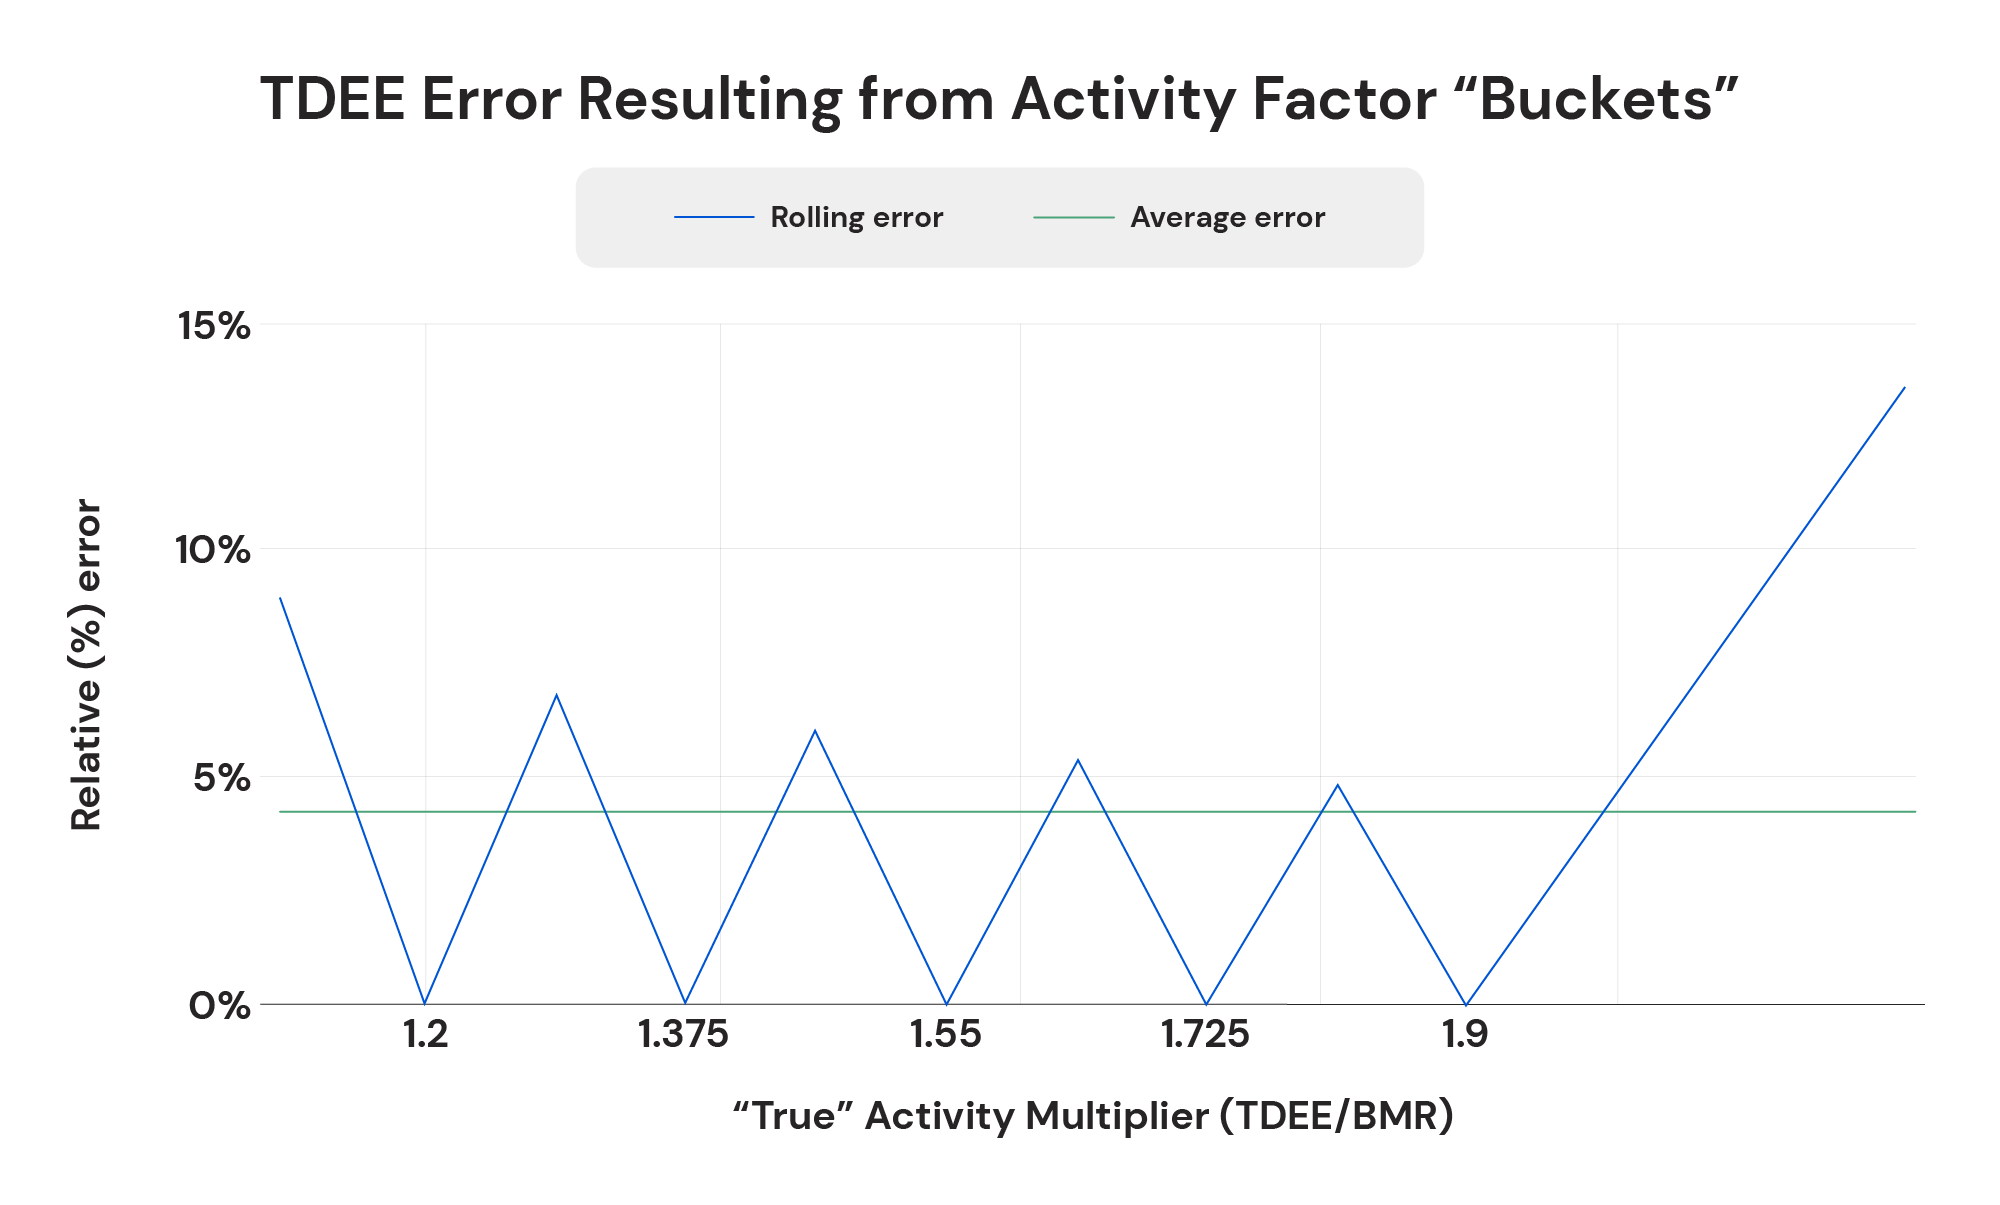 TDEE error resulting from activity factor "buckets"